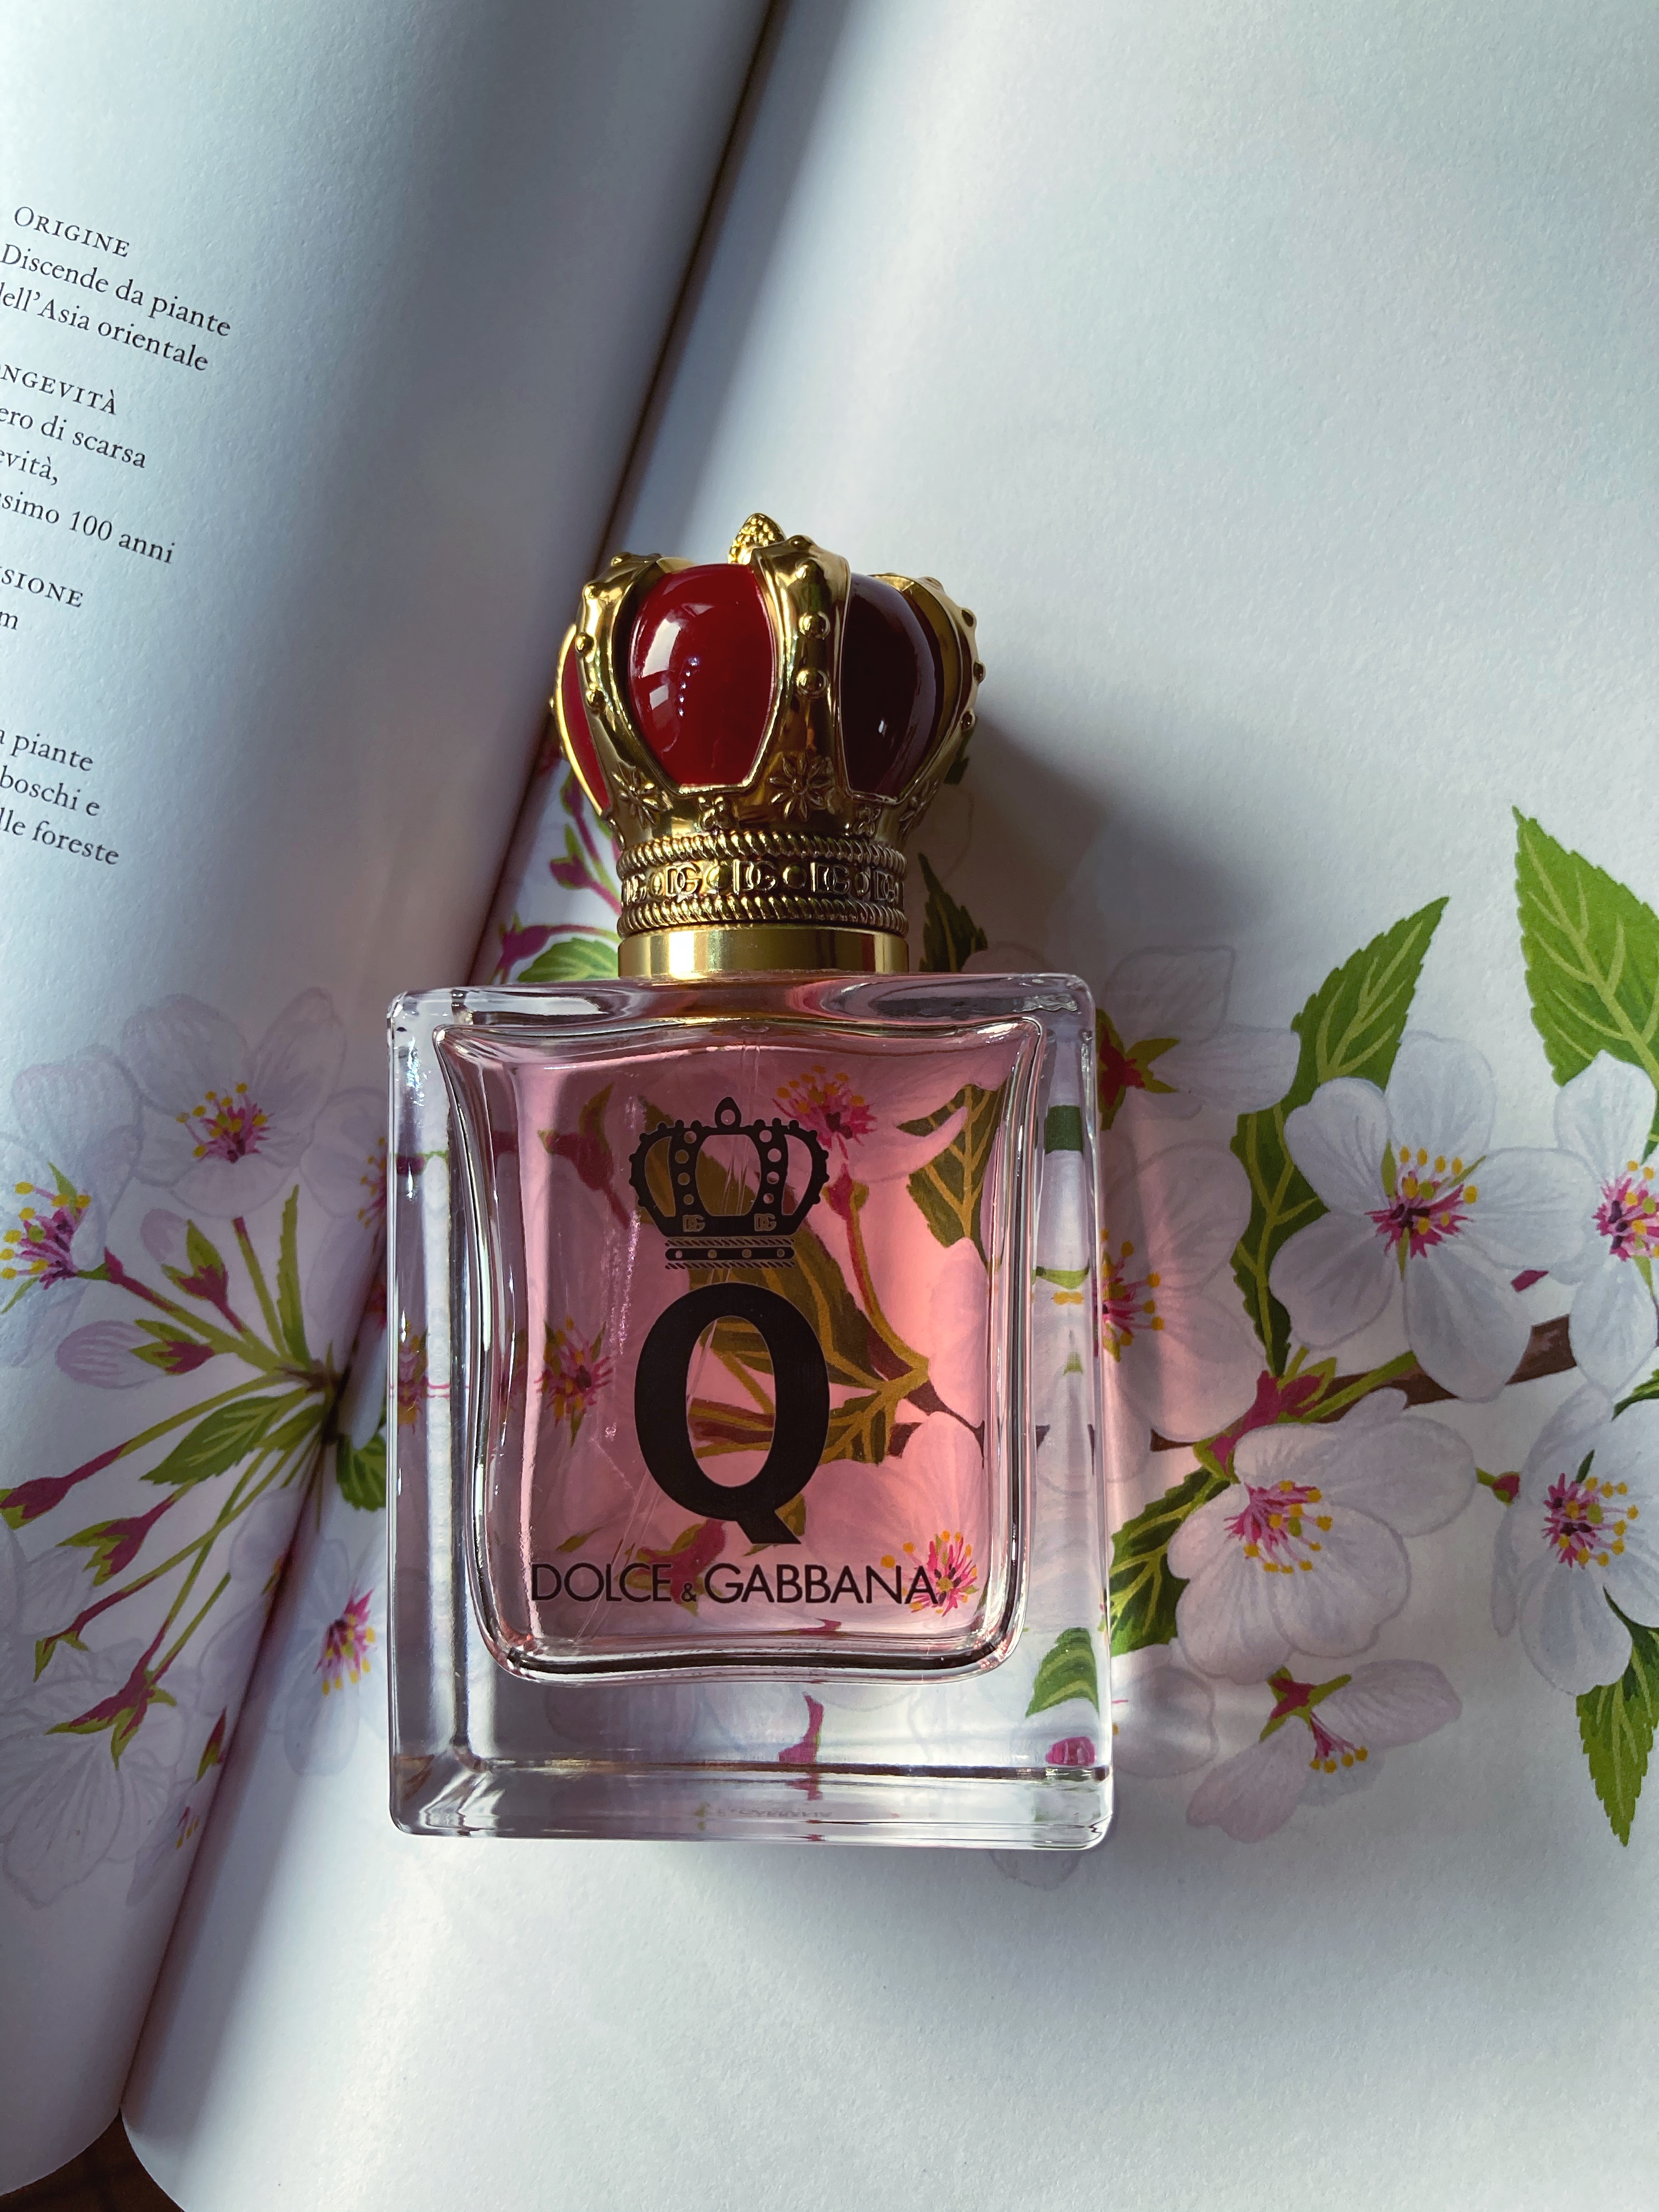 Італійська закоханість з Q by Dolce & Gabbana